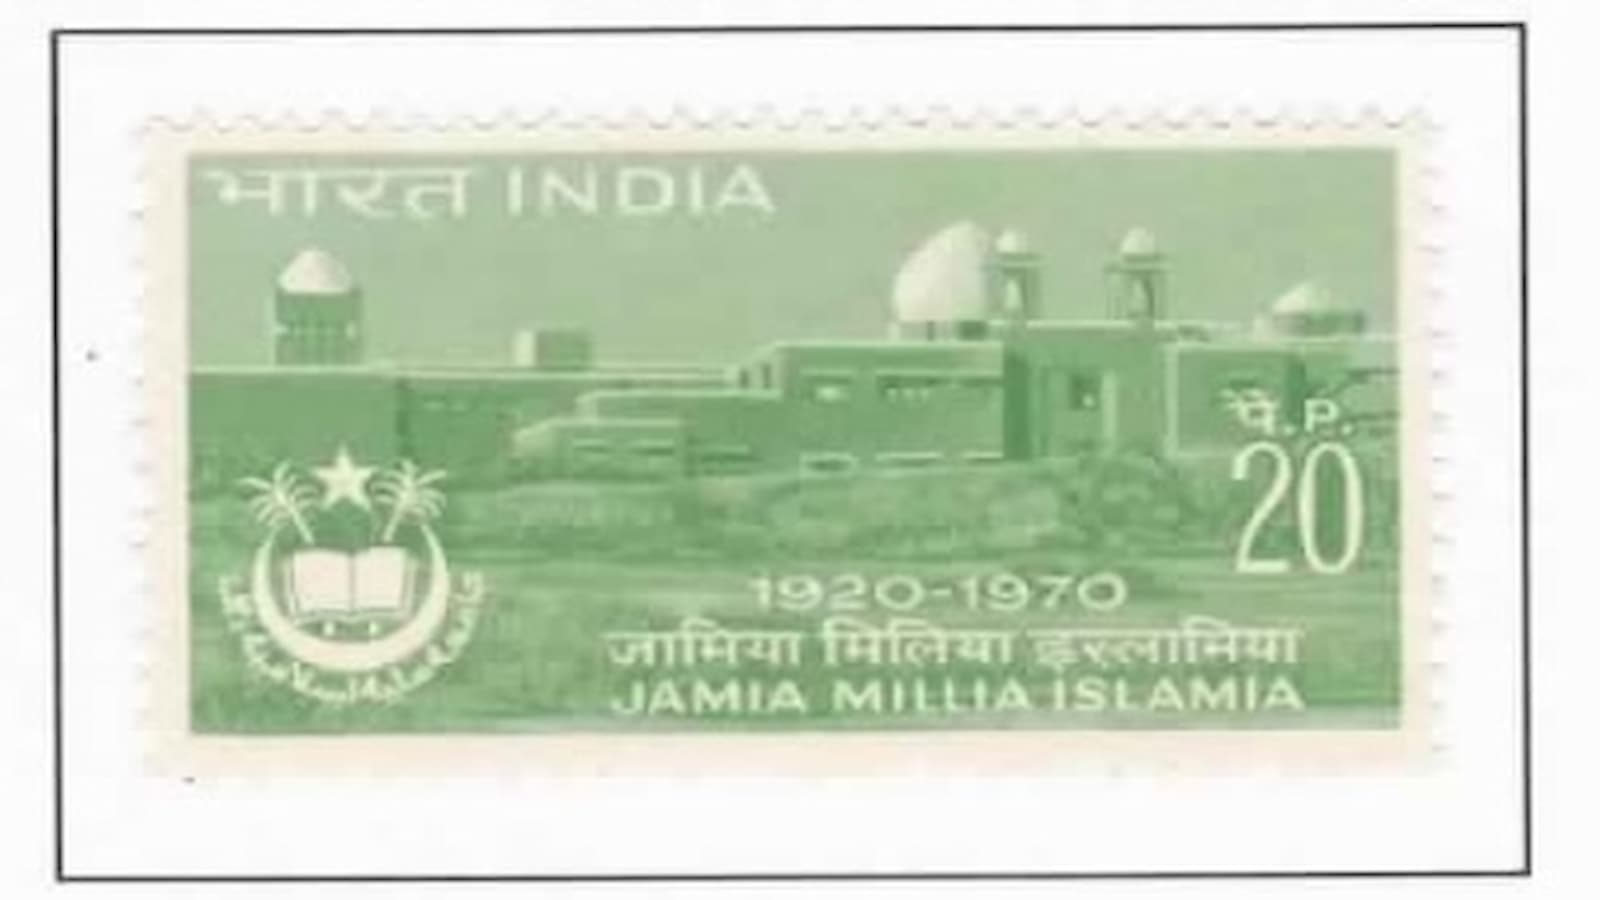 Jamia Millia Islamia University, General Issue Stamp, India